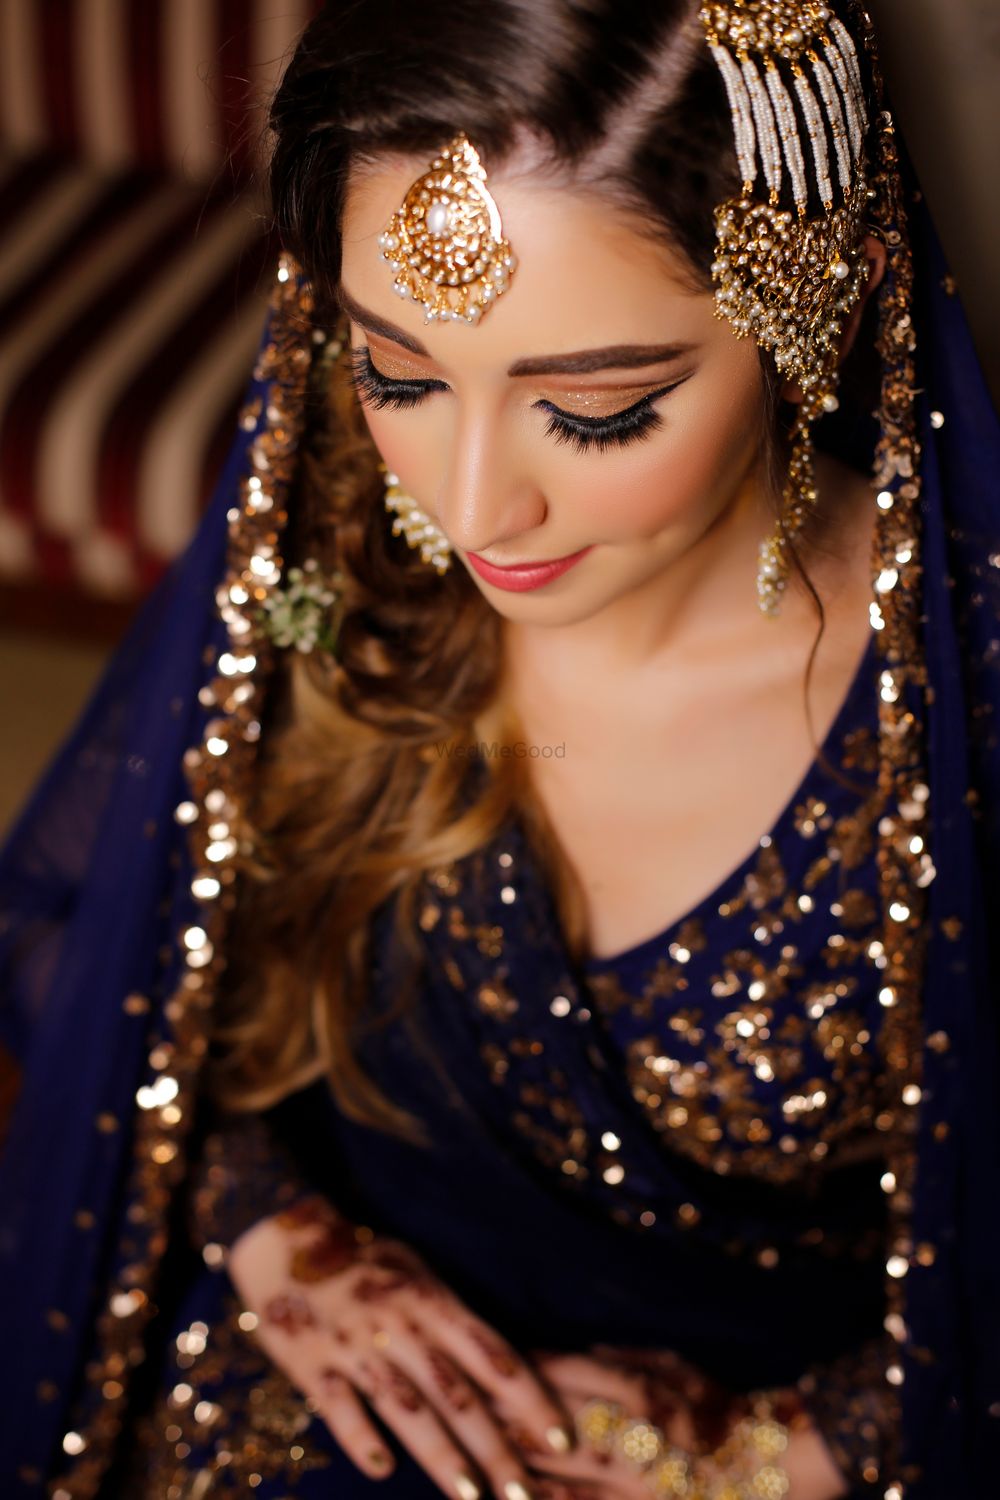 Photo By Honey Bhatia - Bridal Makeup